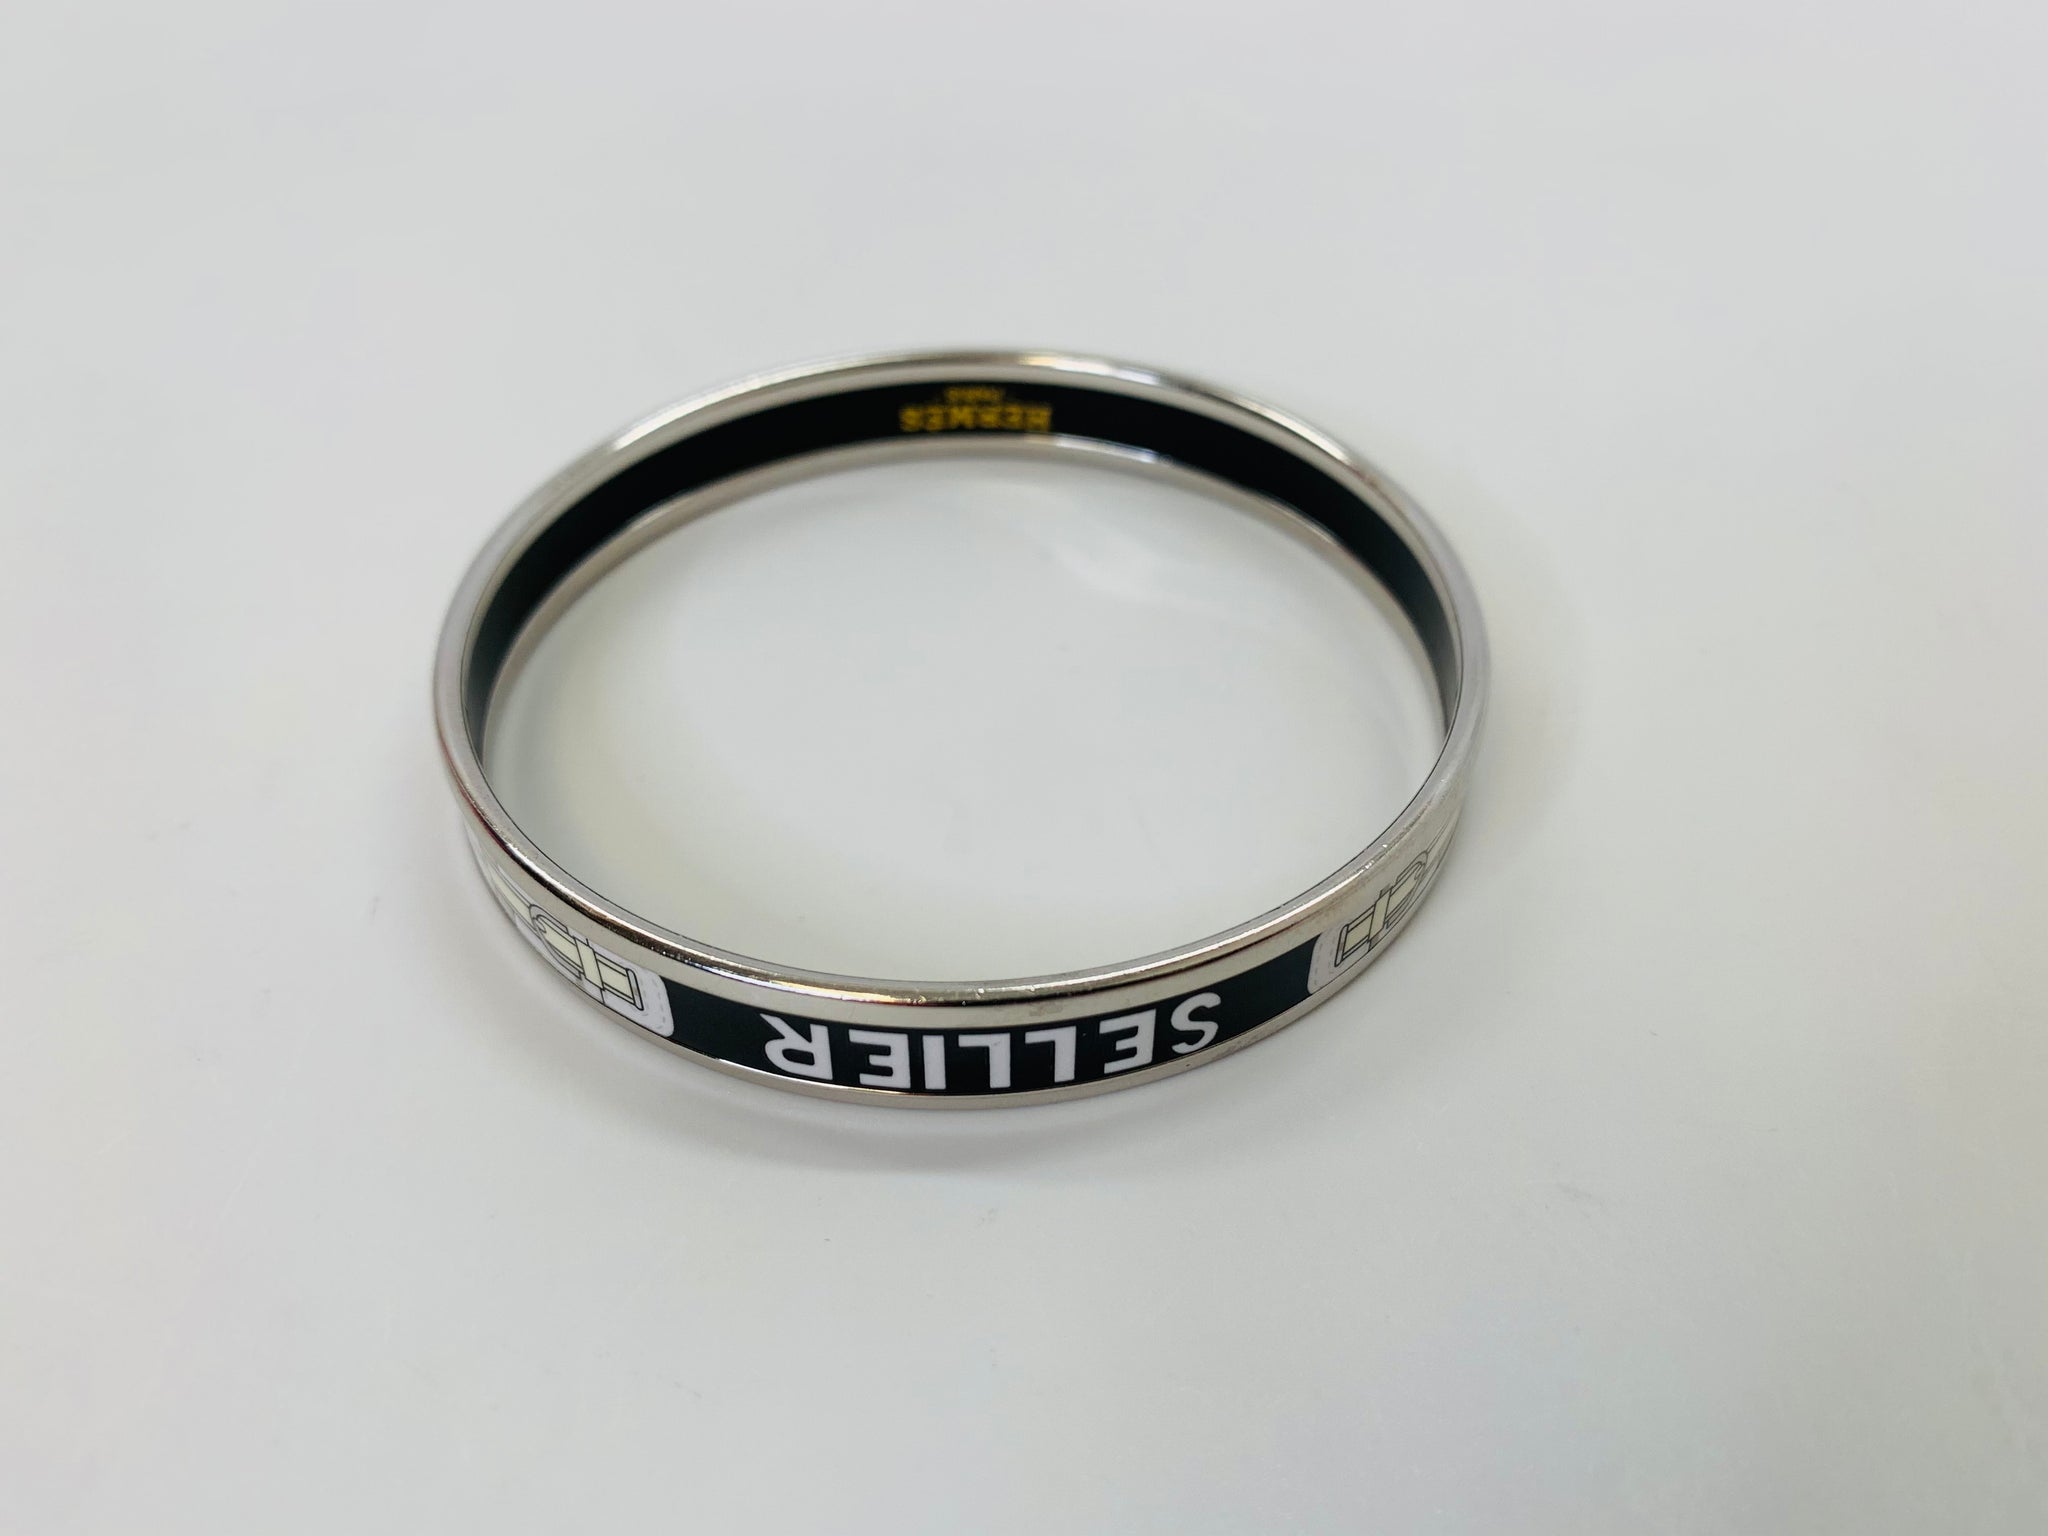 HERMES NAME enamel wide bangle bracelet